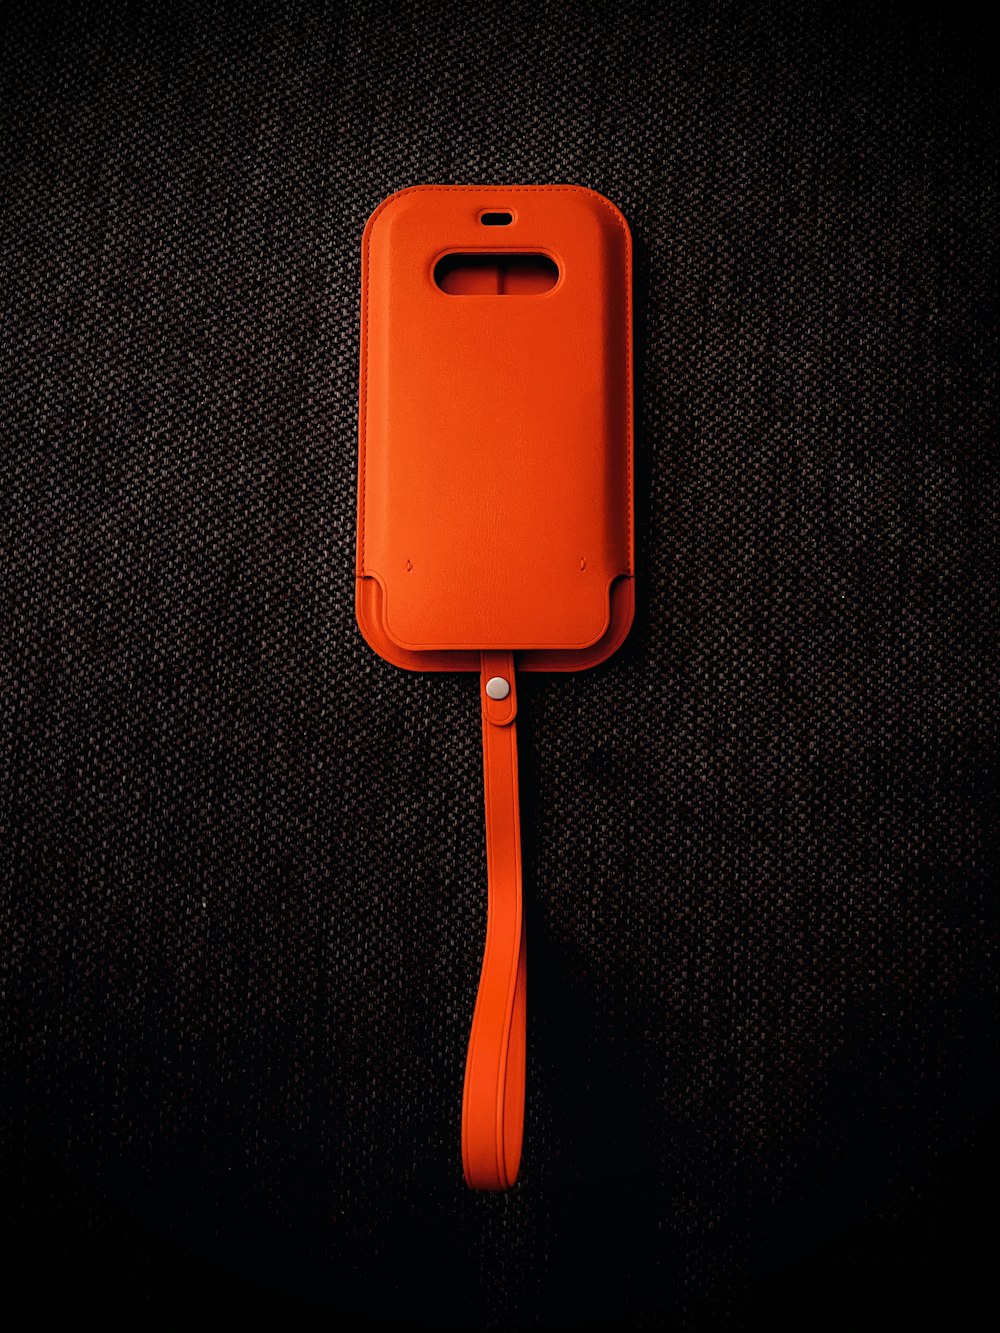 orange iphone case on black textile